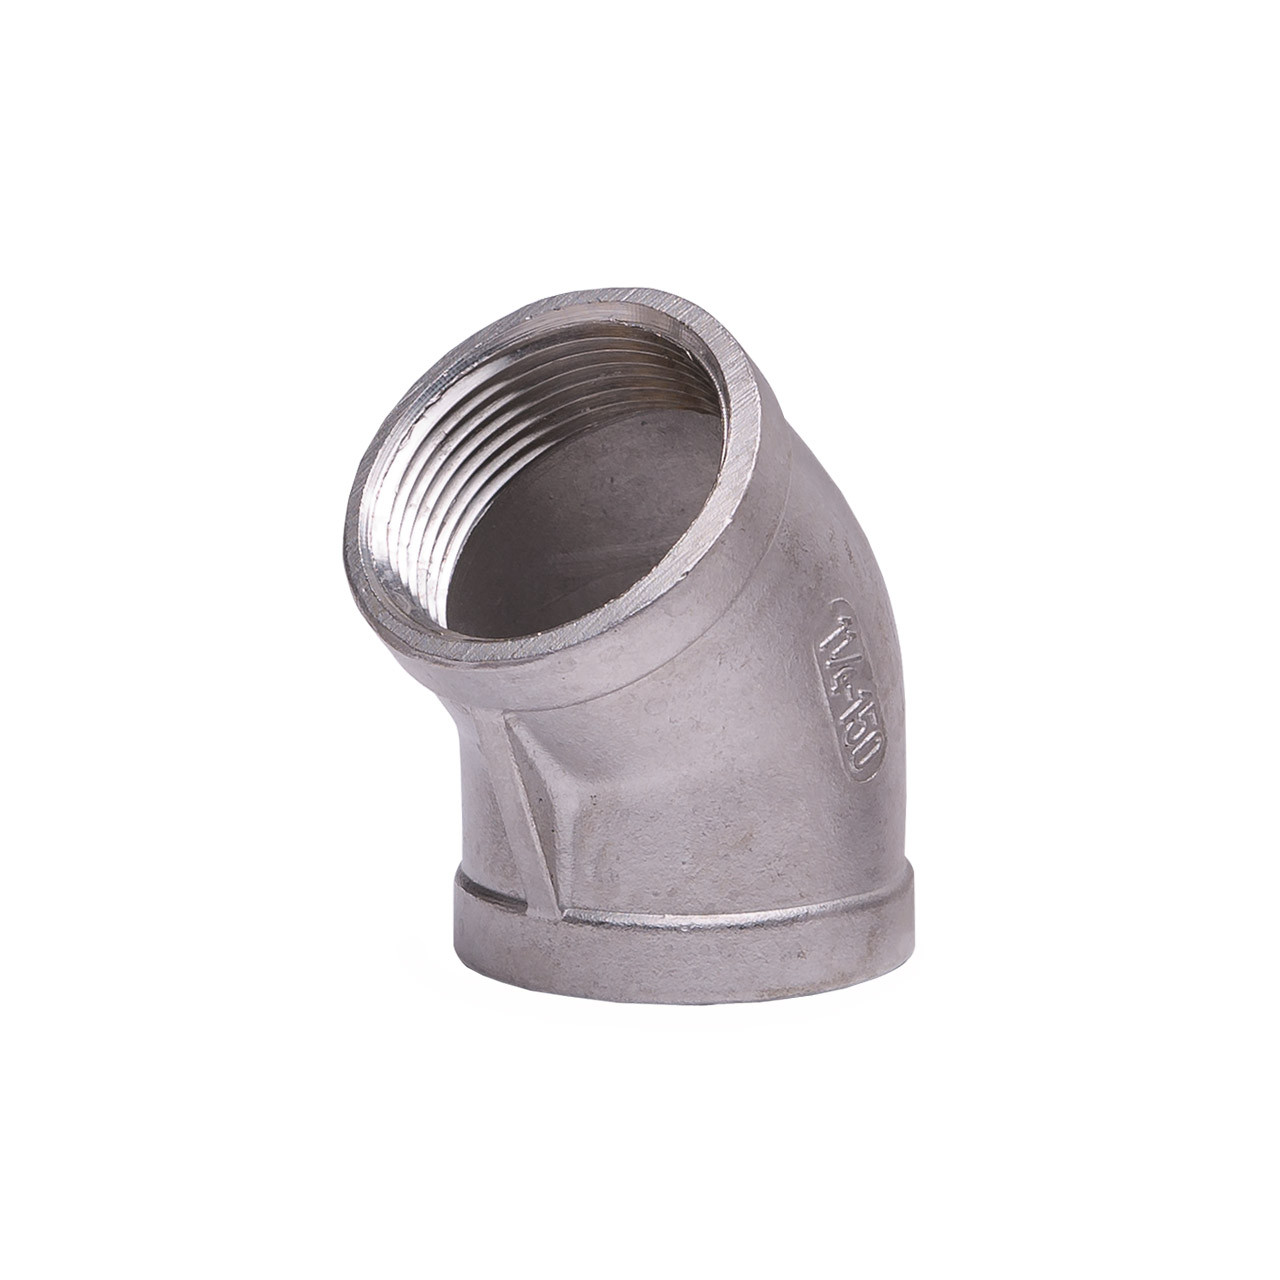 Pipe Fittings - Stainless Steel 45° Elbow - 1 NPT 150# 316